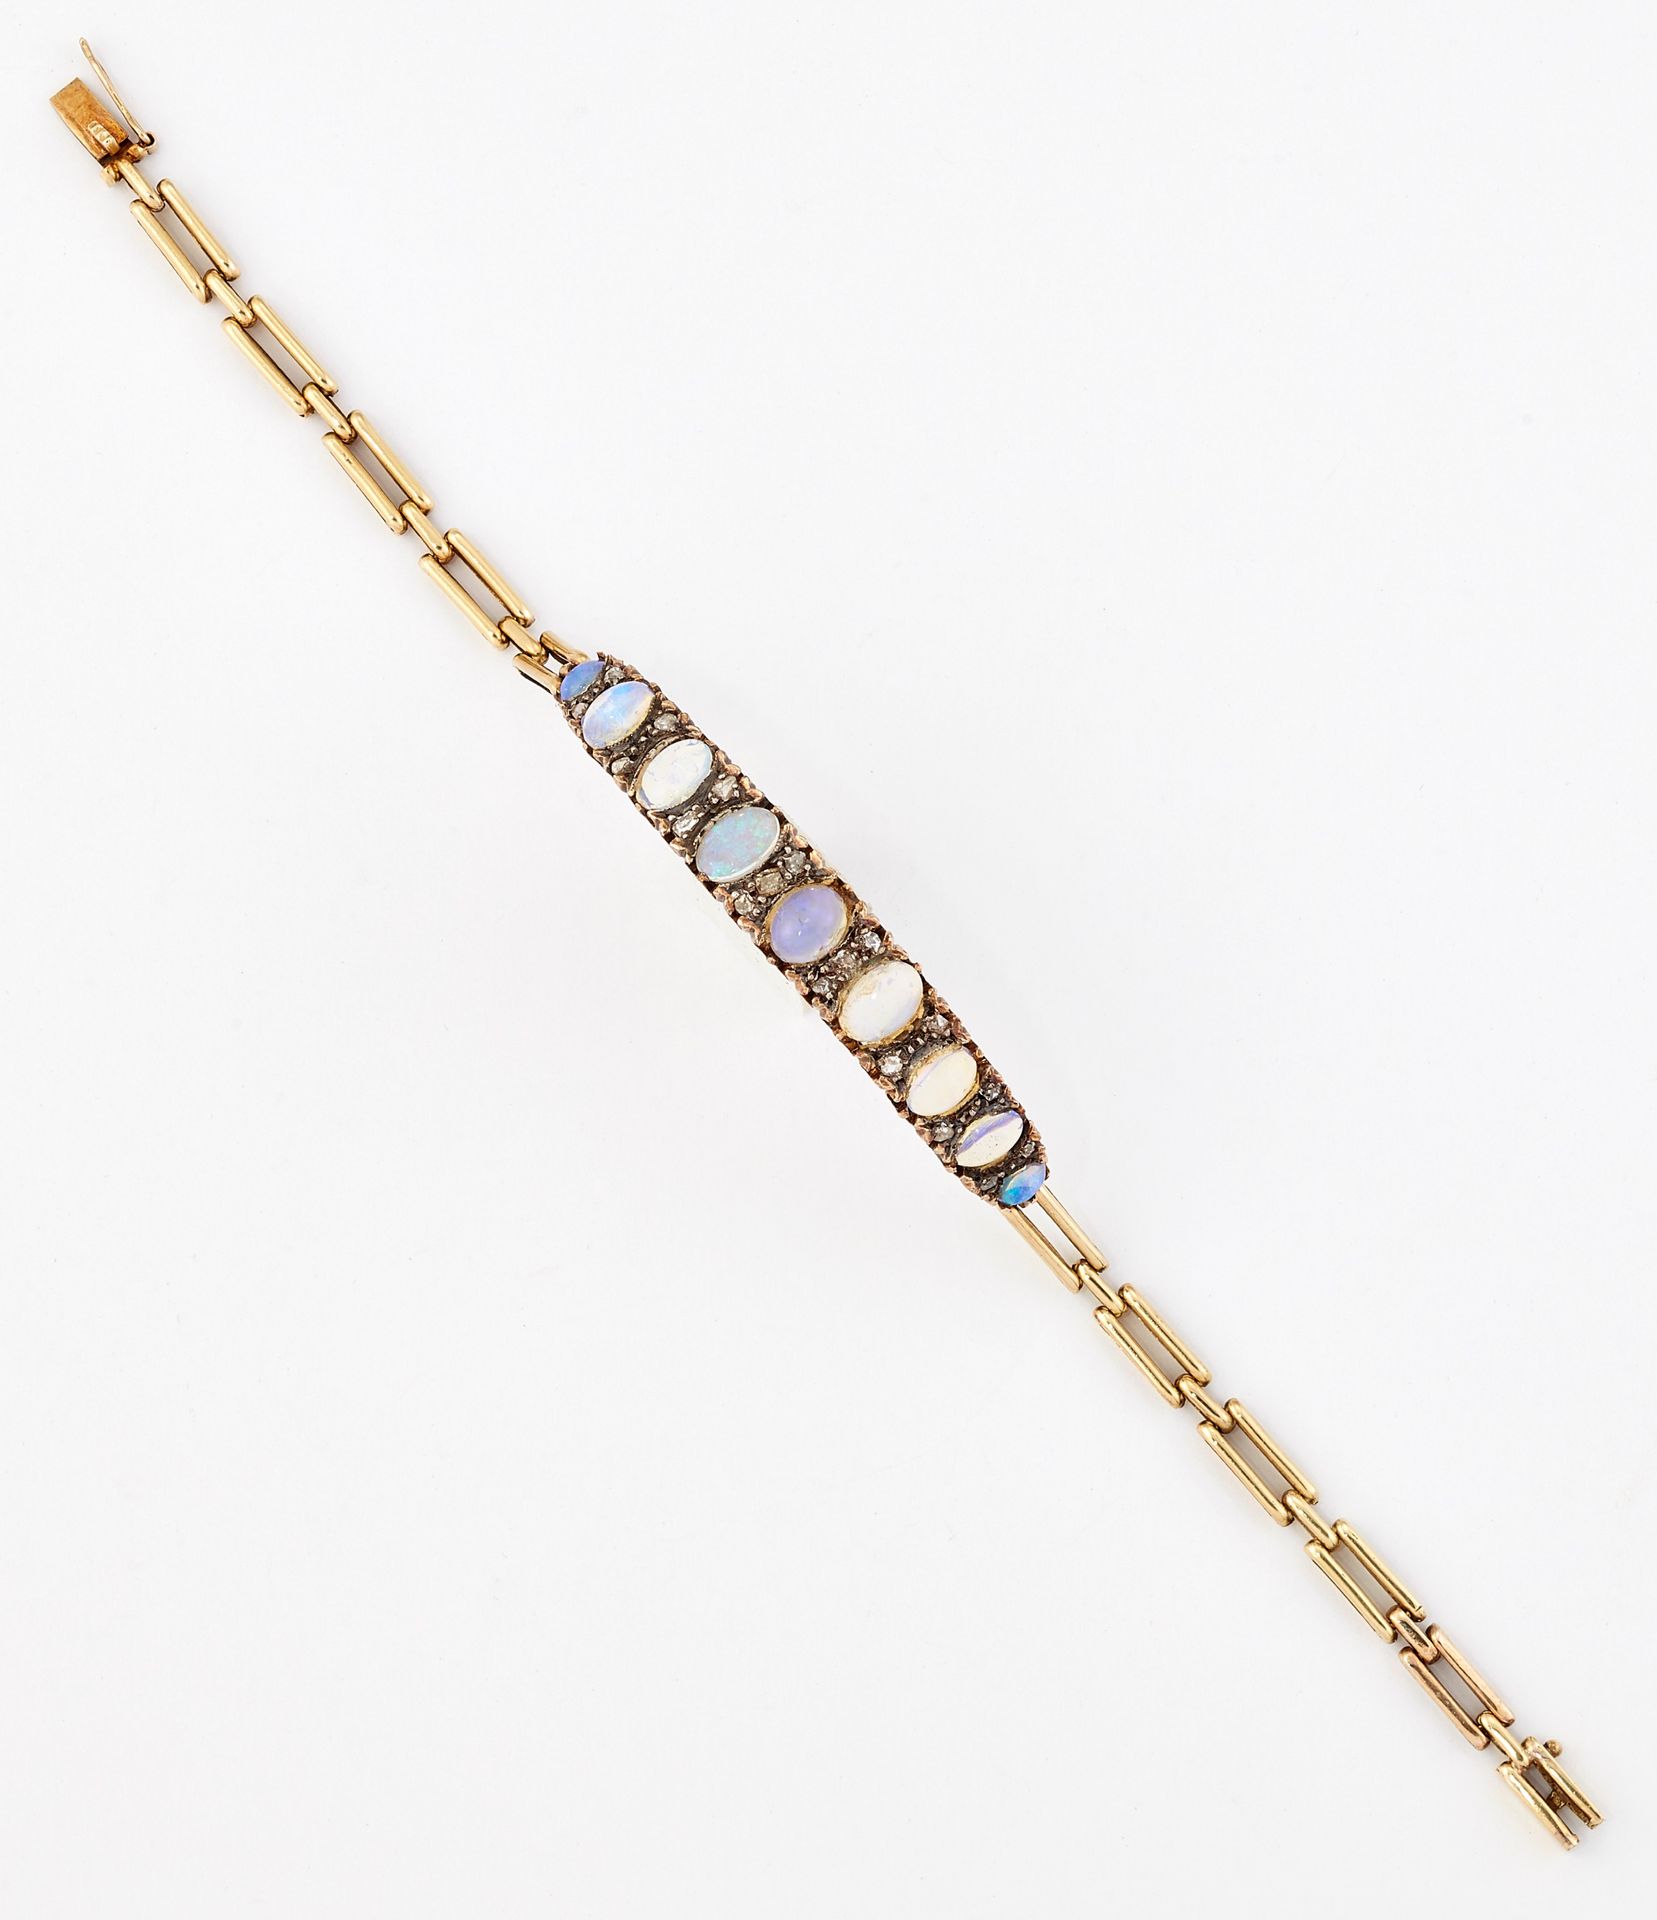 Null LATE VICTORIAN OPAL AND DIAMOND BRACELET, abgestufte ovale Opale, die durch&hellip;